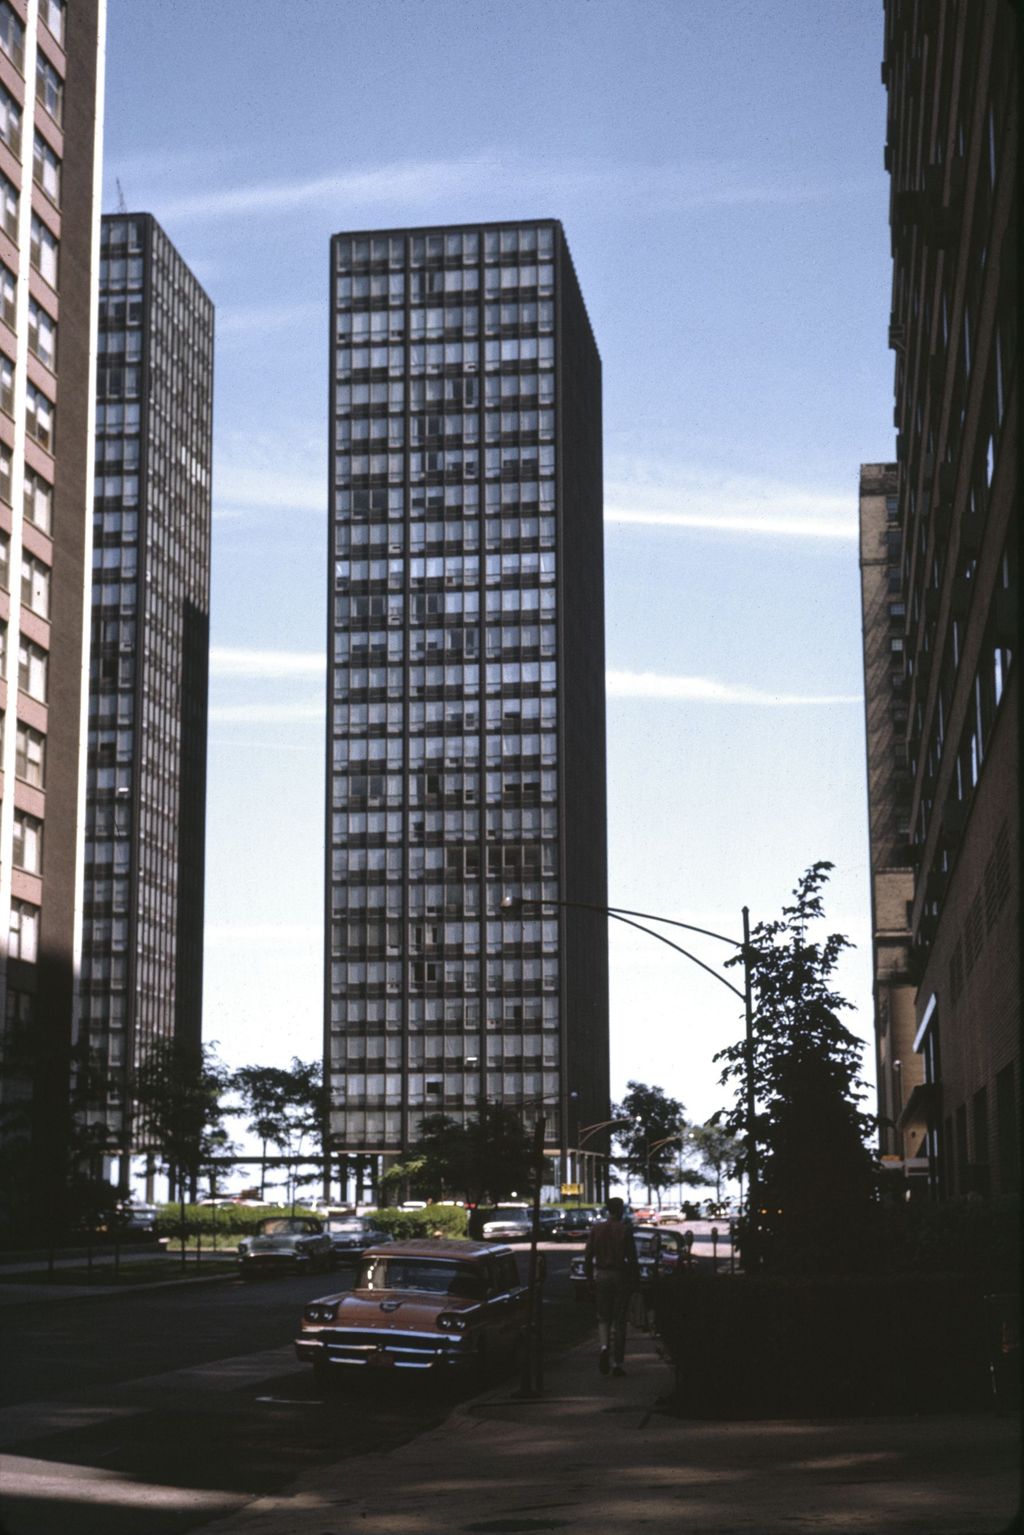 Miniature of 860-880 N. Lake Shore Drive apartments